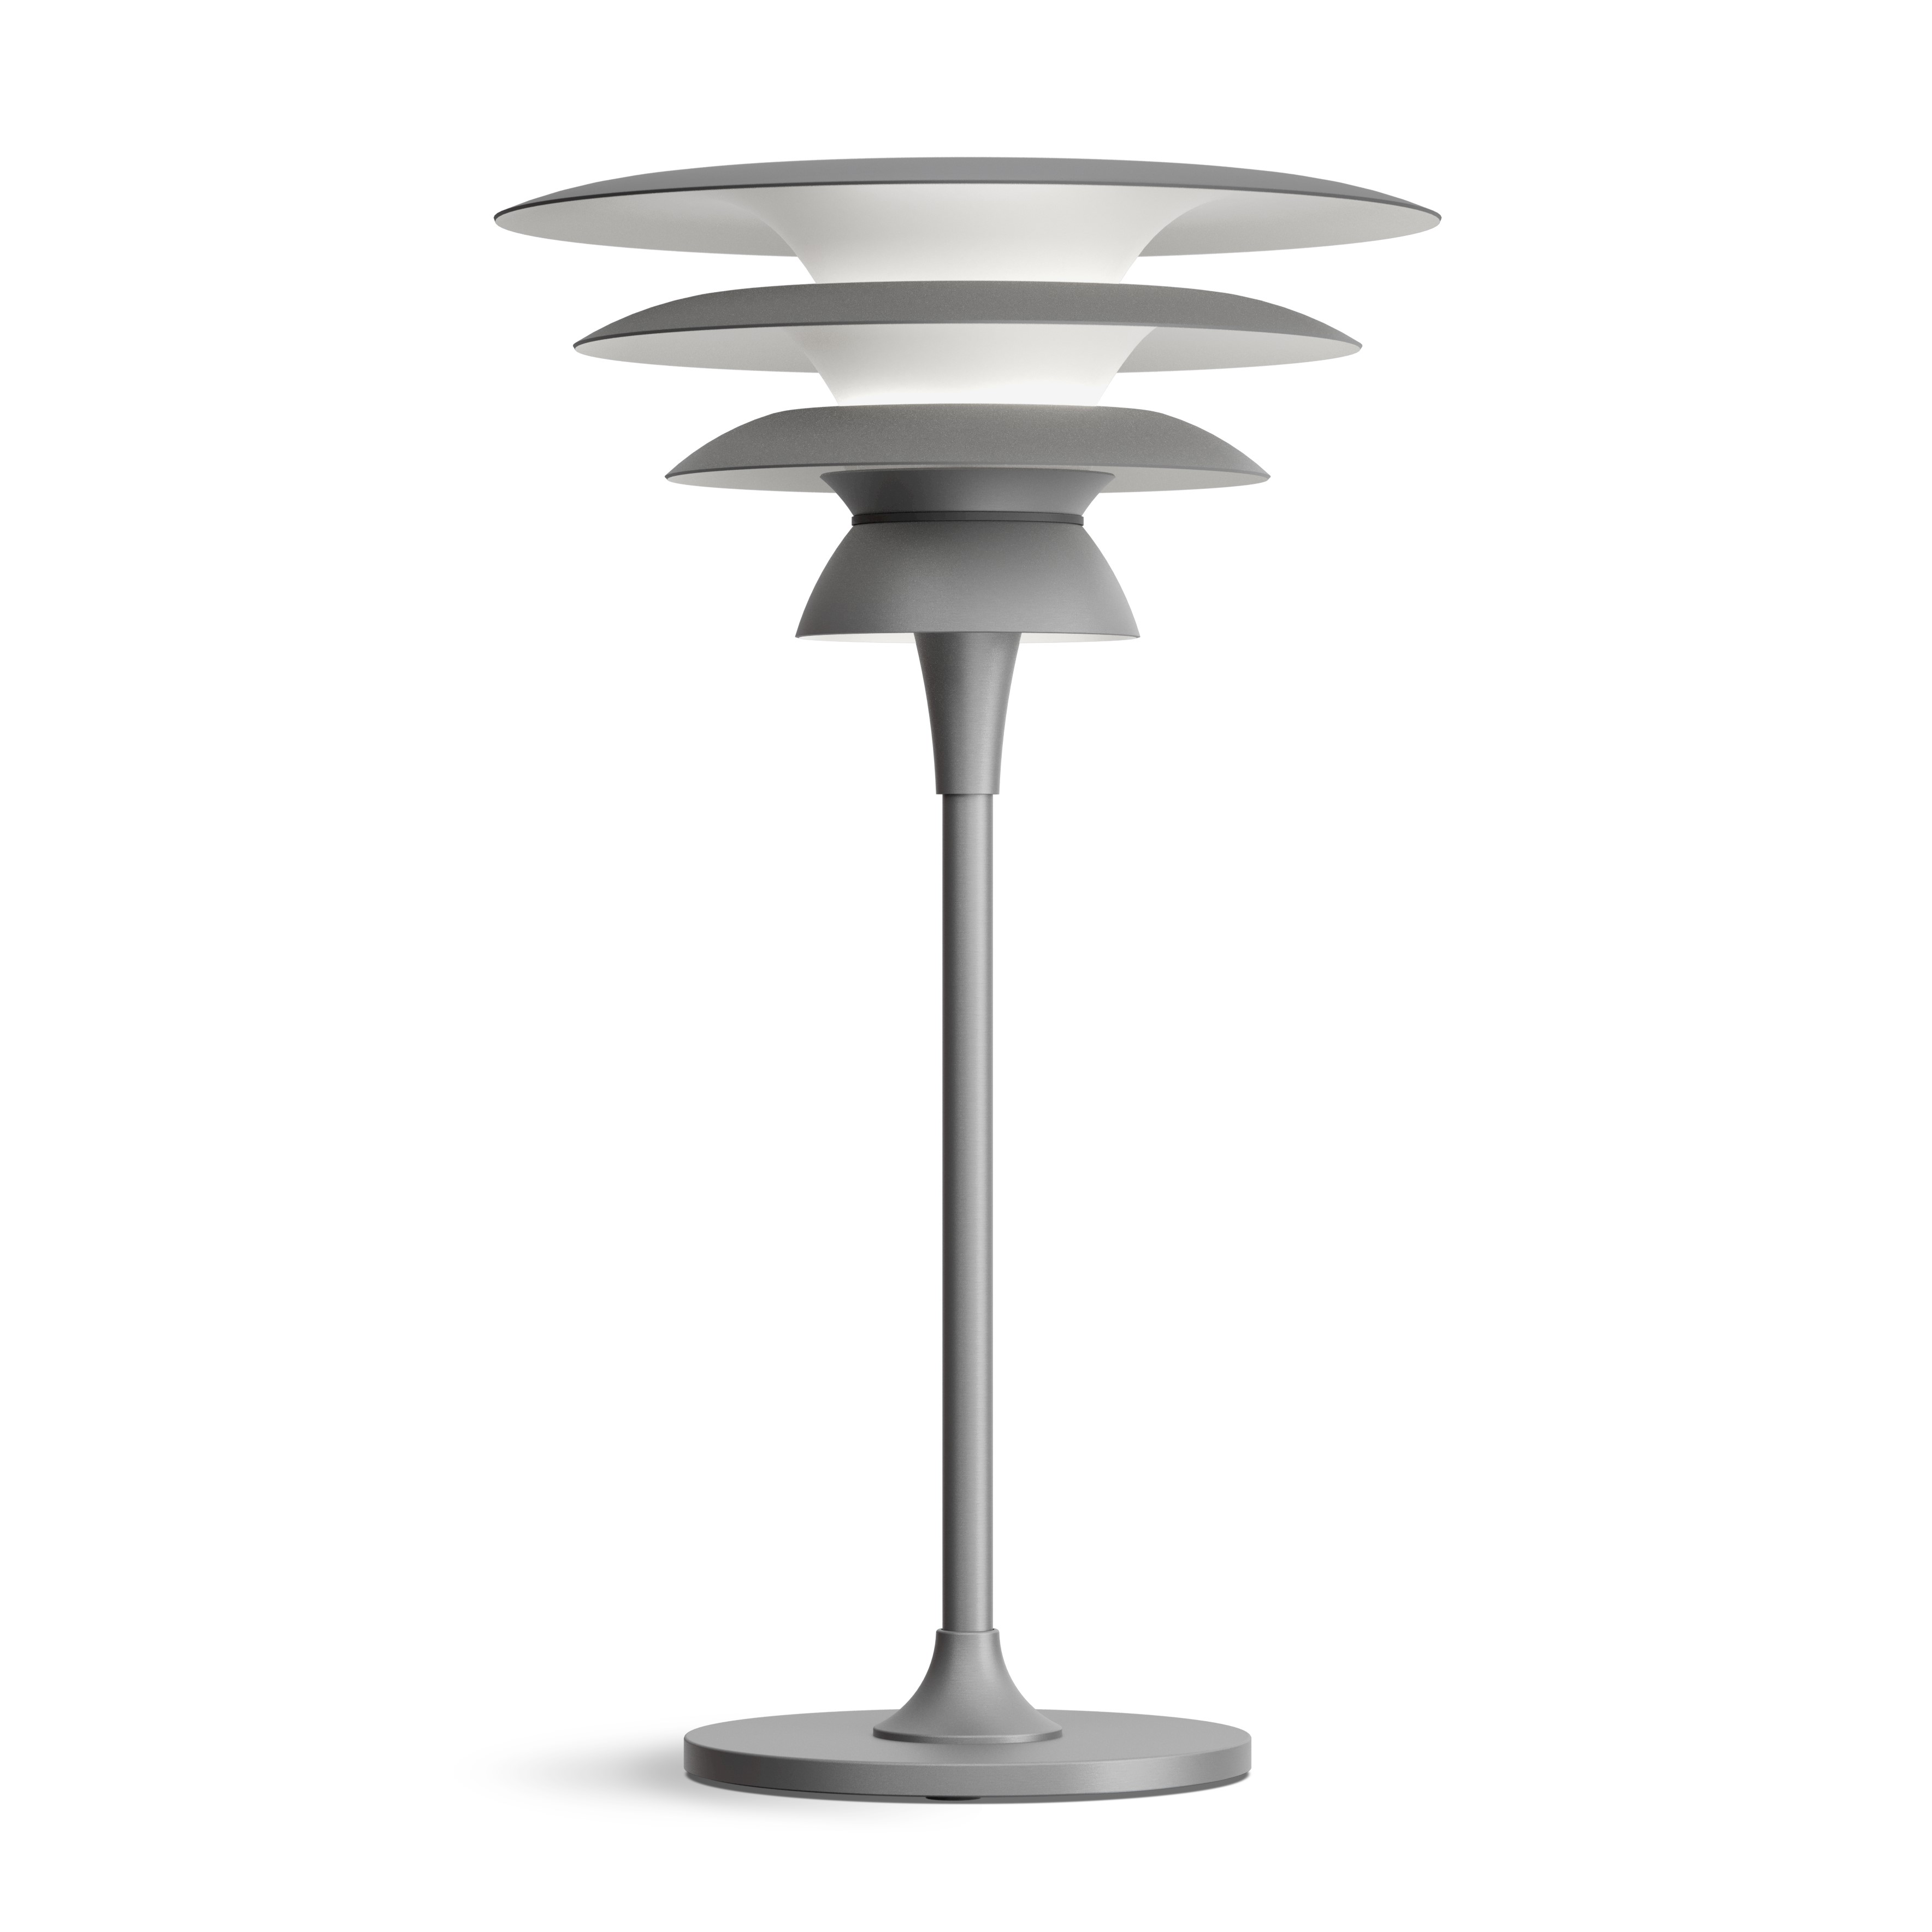 DAVINCI H500 table lamp